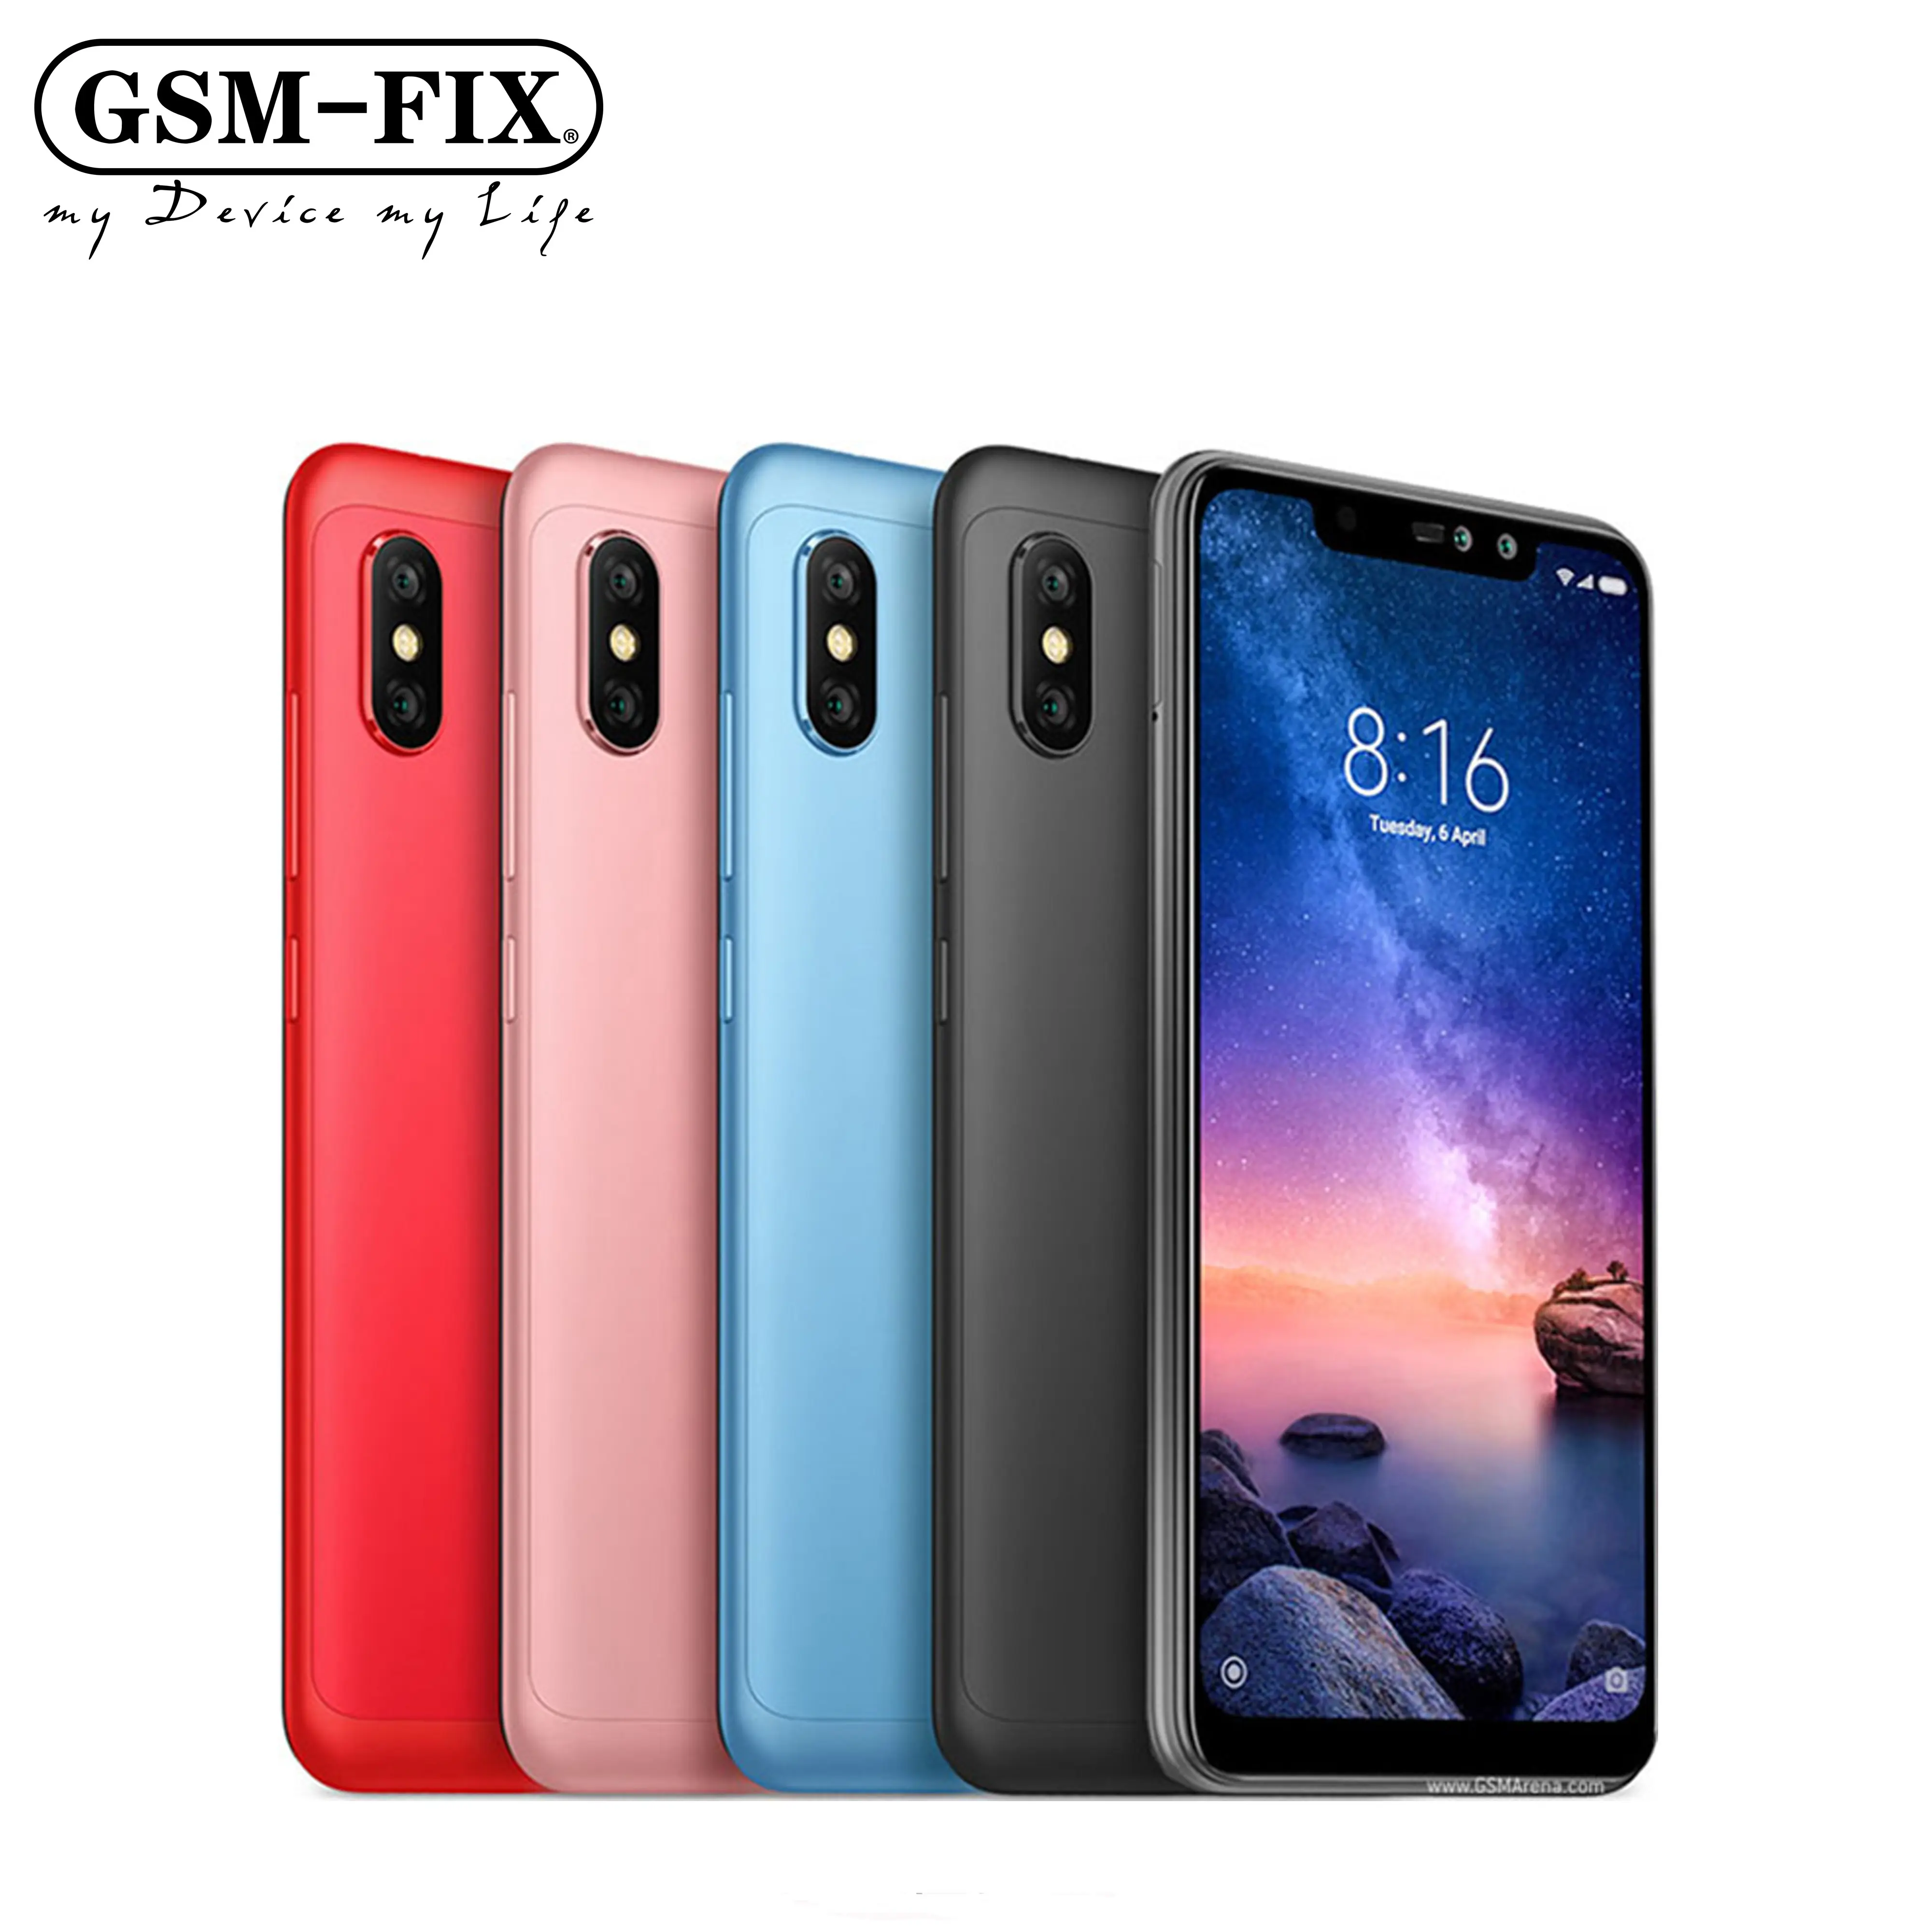 GSM-FIX High Quality Mobile Phone Original Phone For Xiaomi Mi A2 Lite (Redmi 6 Pro) 64GB 4GB RAM Smartphone